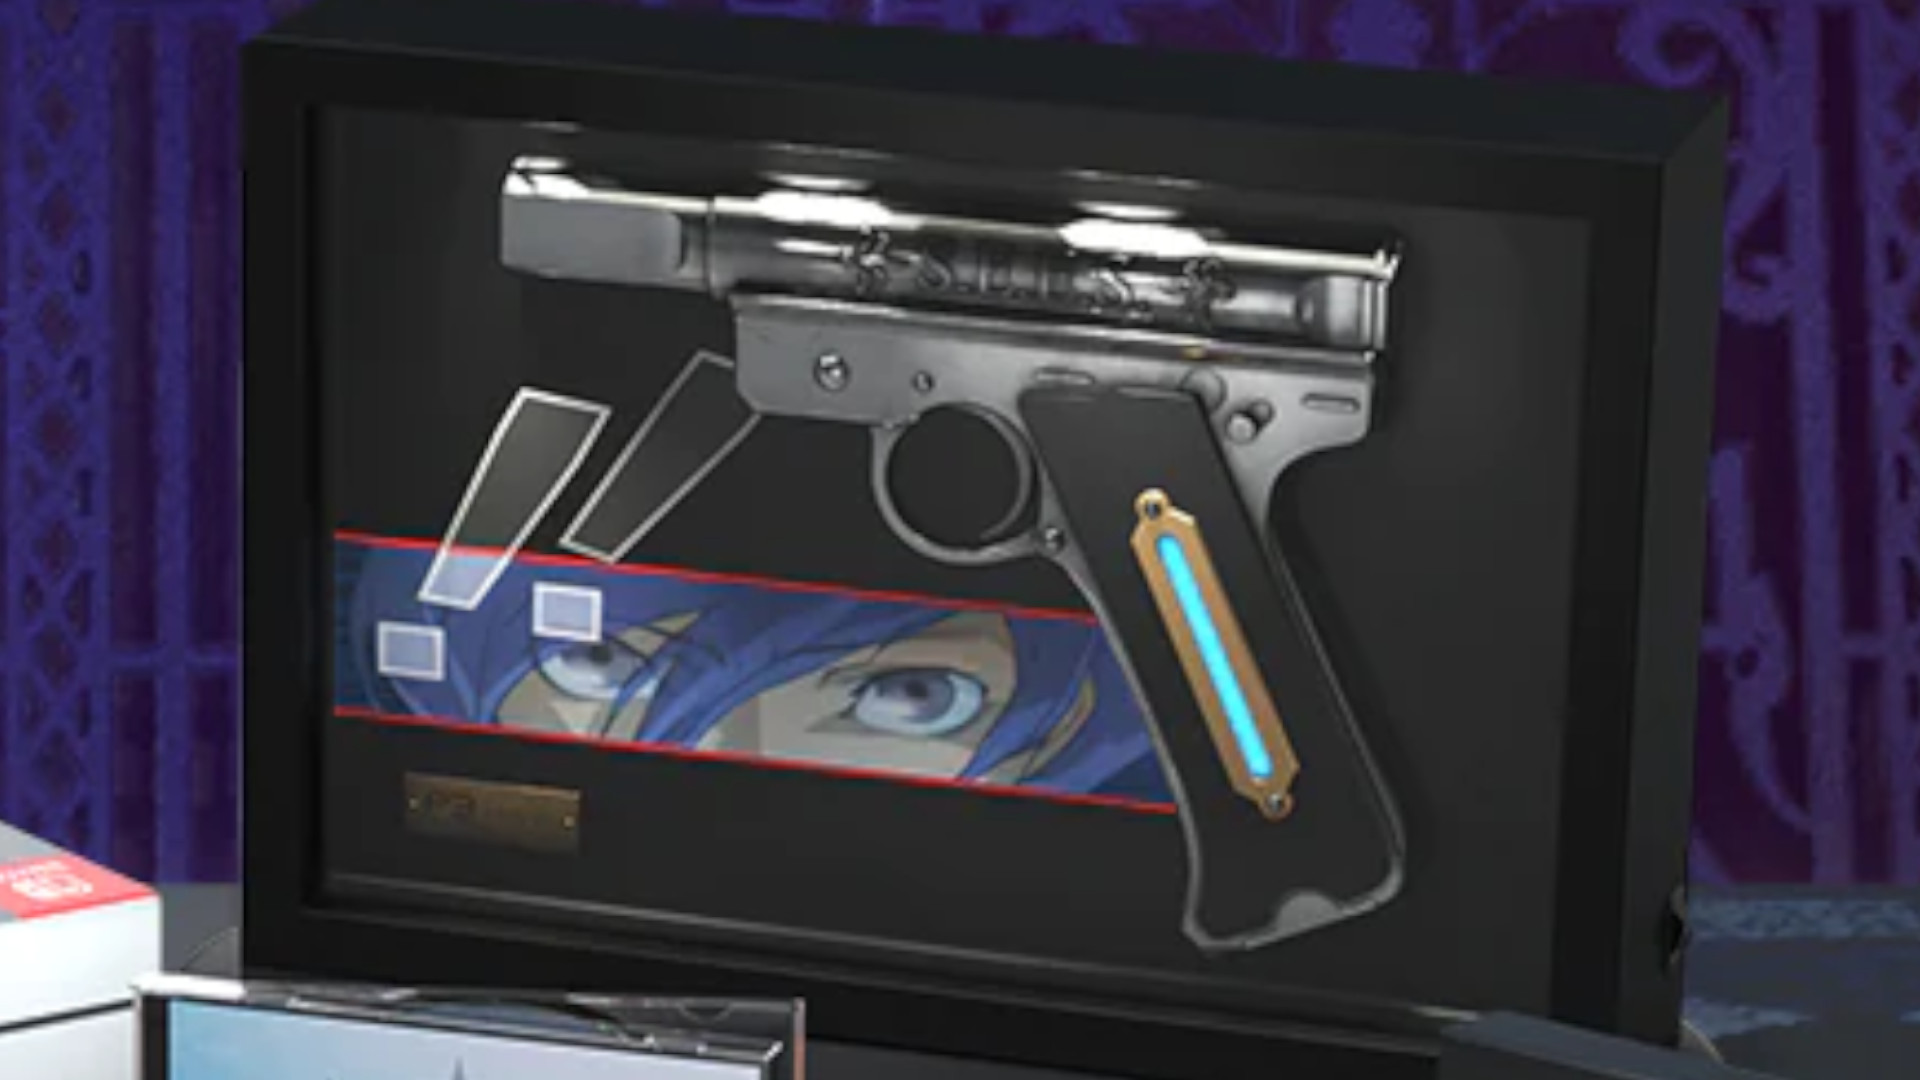 $200 Persona 3 Portable edition comes with the gun